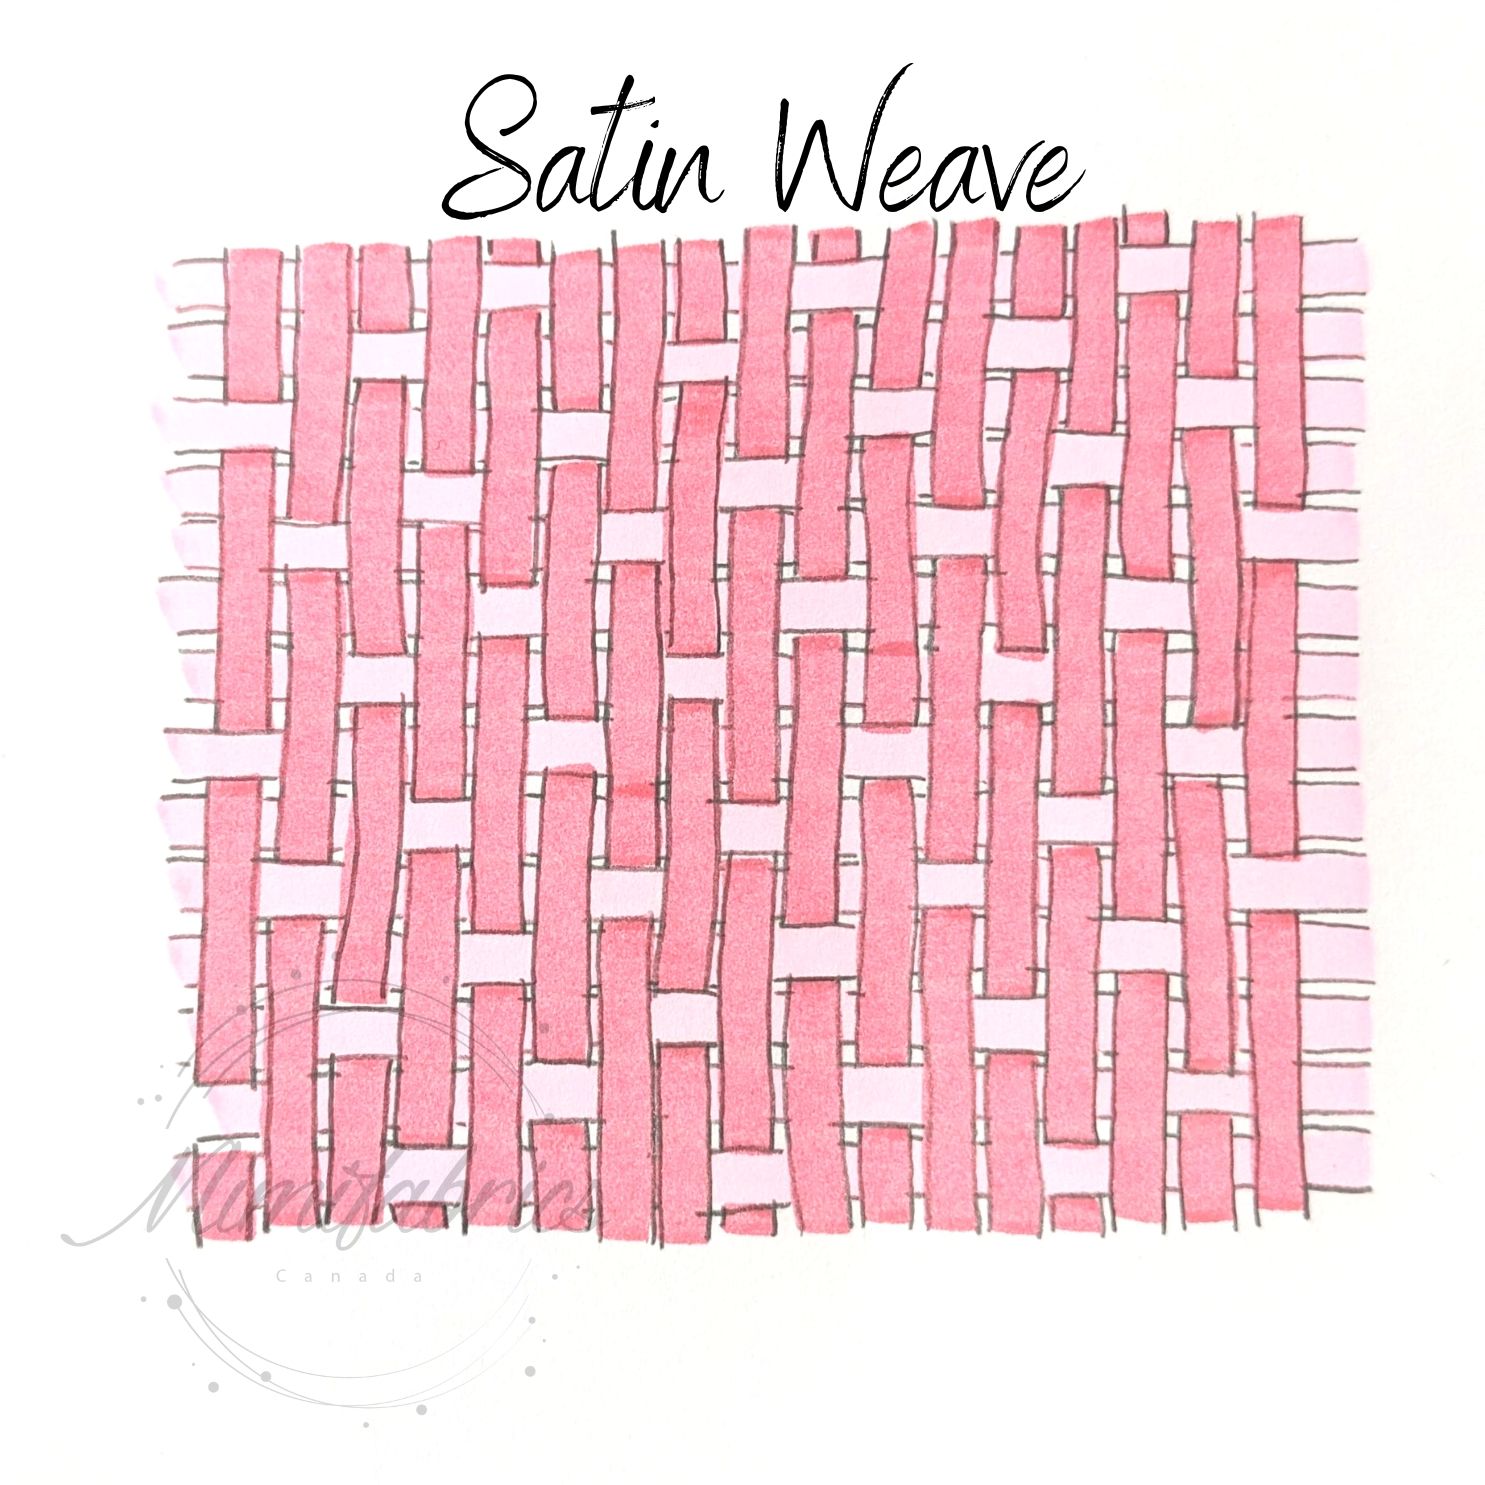 Satin Weave Fabric Illustration